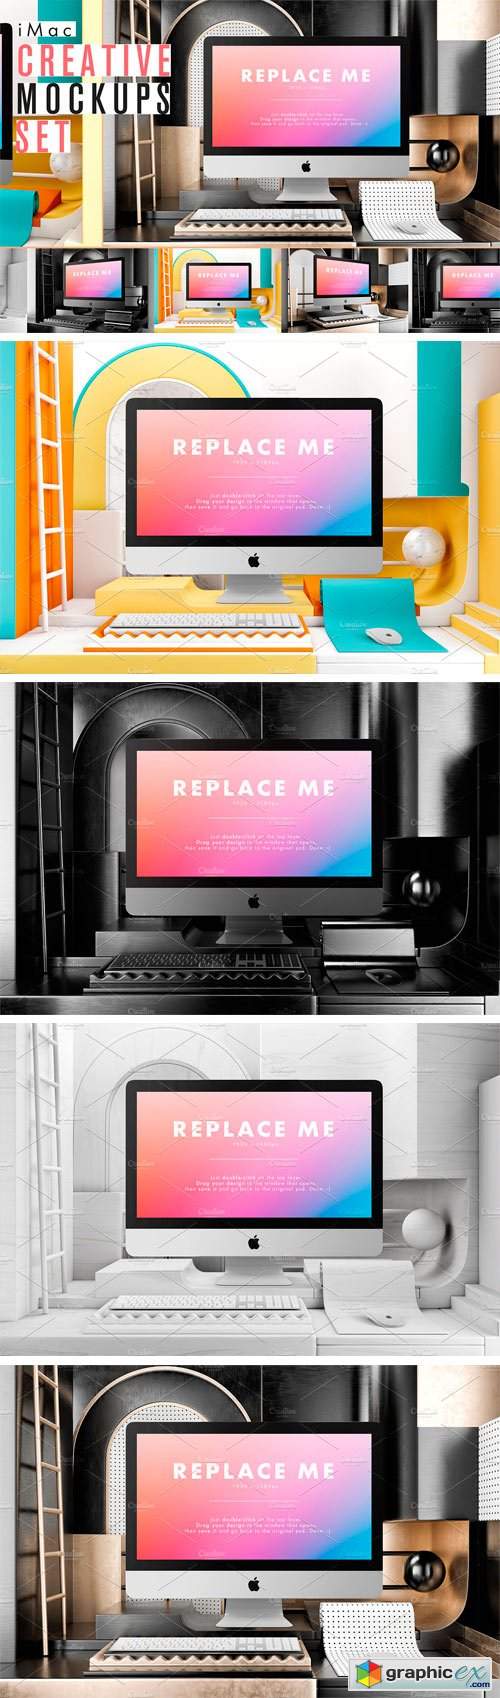 iMac Creative Mockups Set